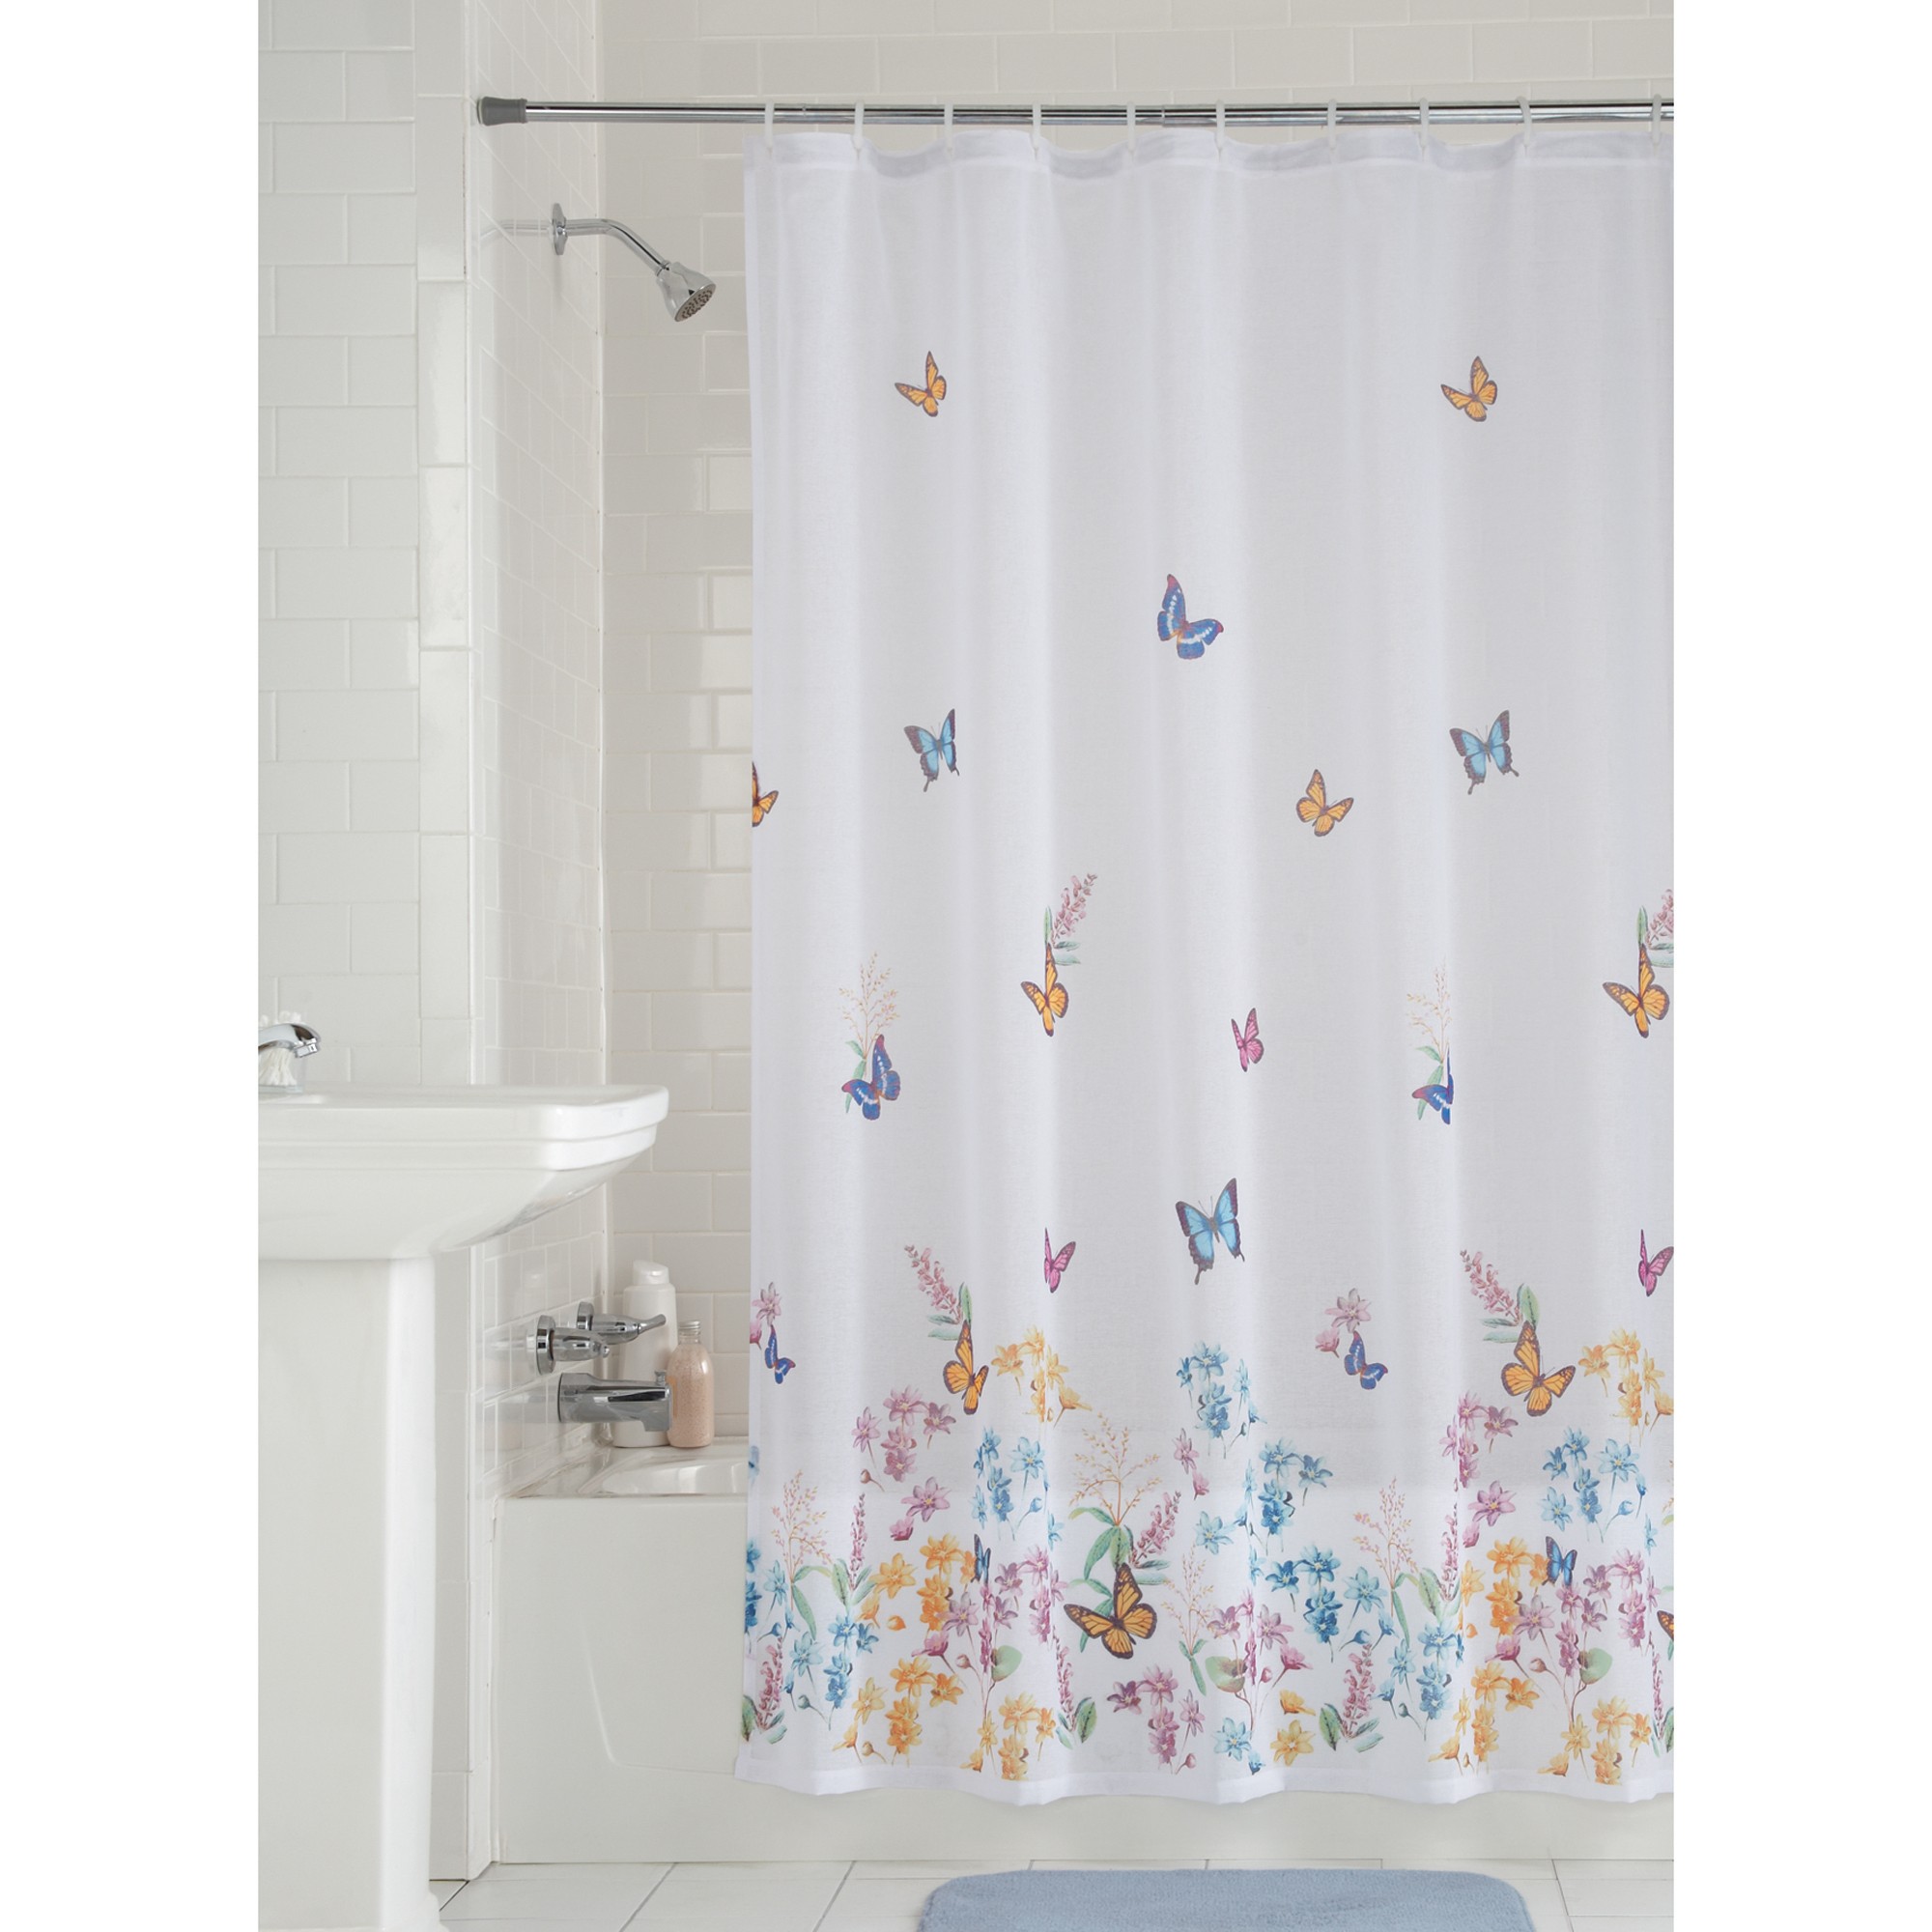 Mainstays butterfly semi sheer fabric shower curtain 70